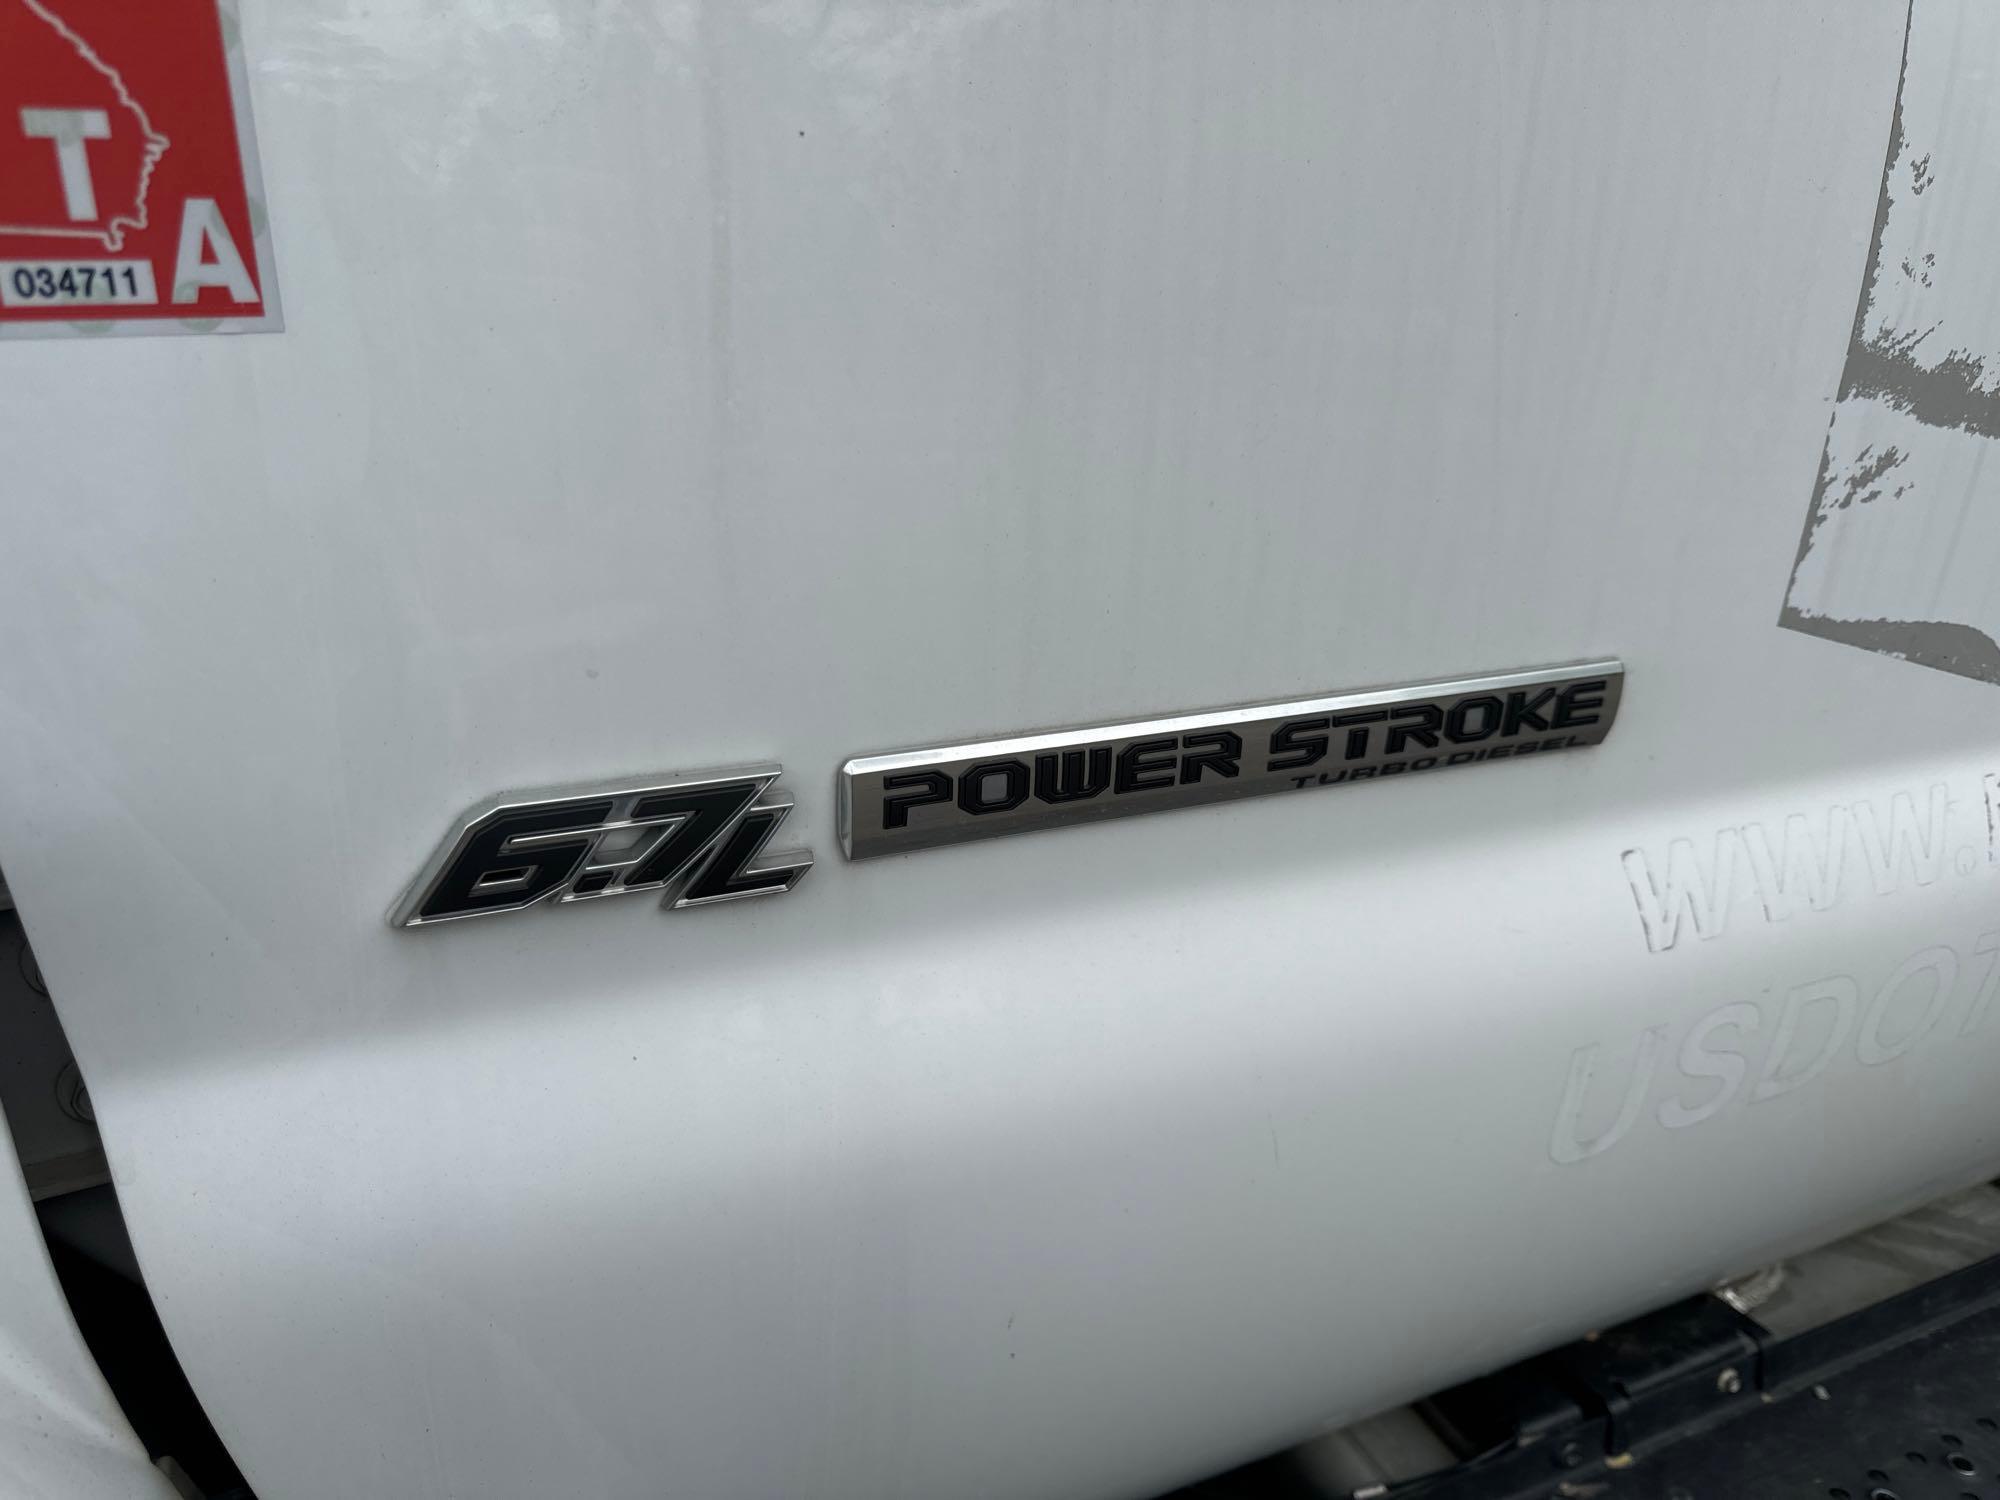 2019 Ford F-750 Truck, VIN # 1FDWF7DC6KDF07420